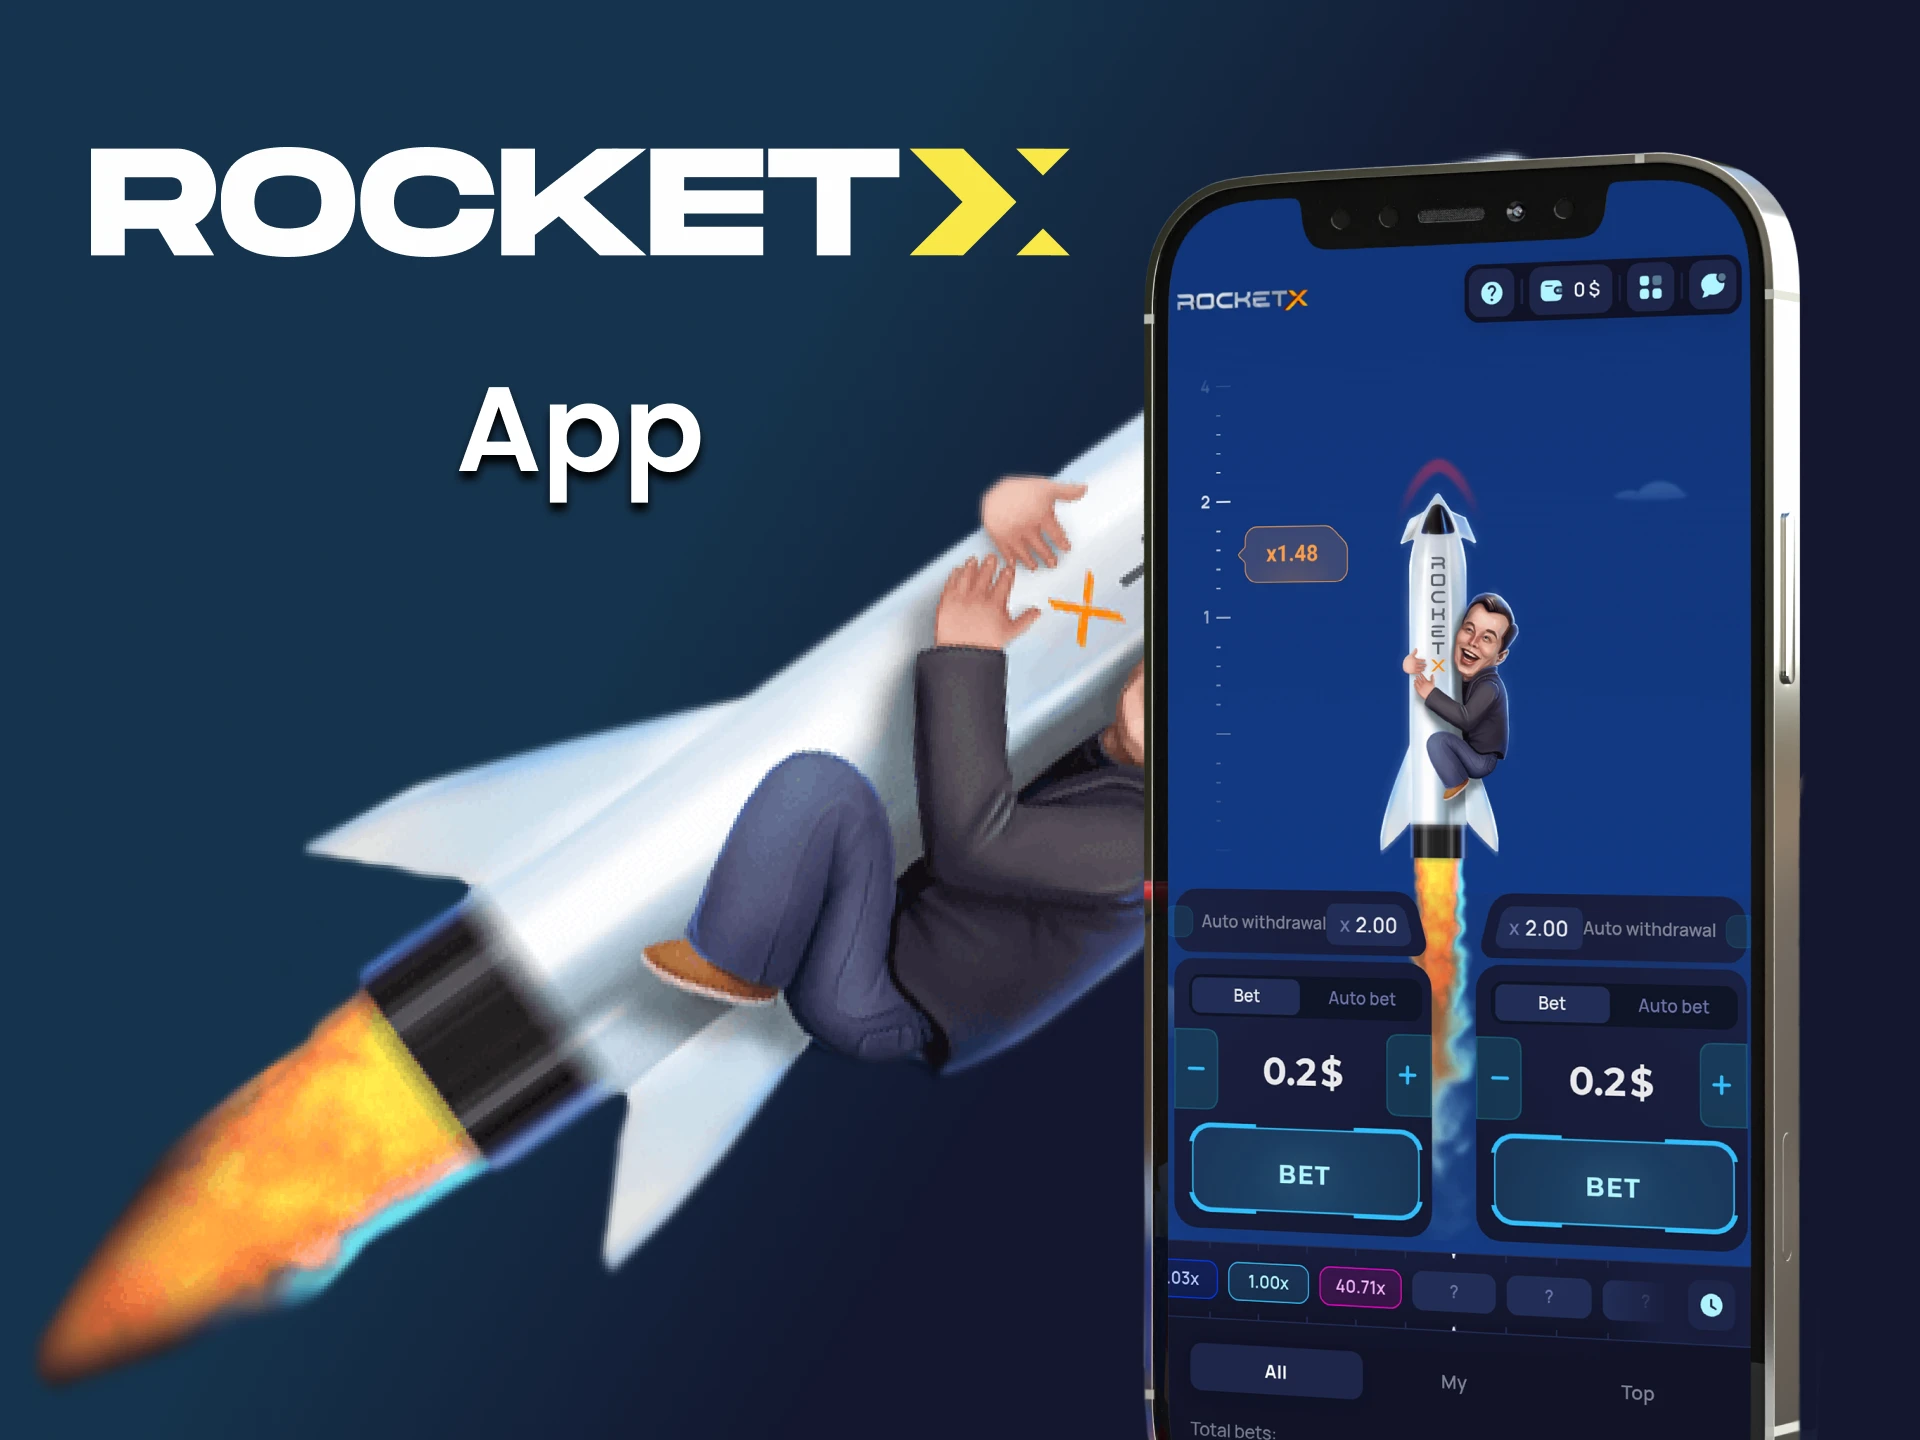 Play Rocket X through the app.